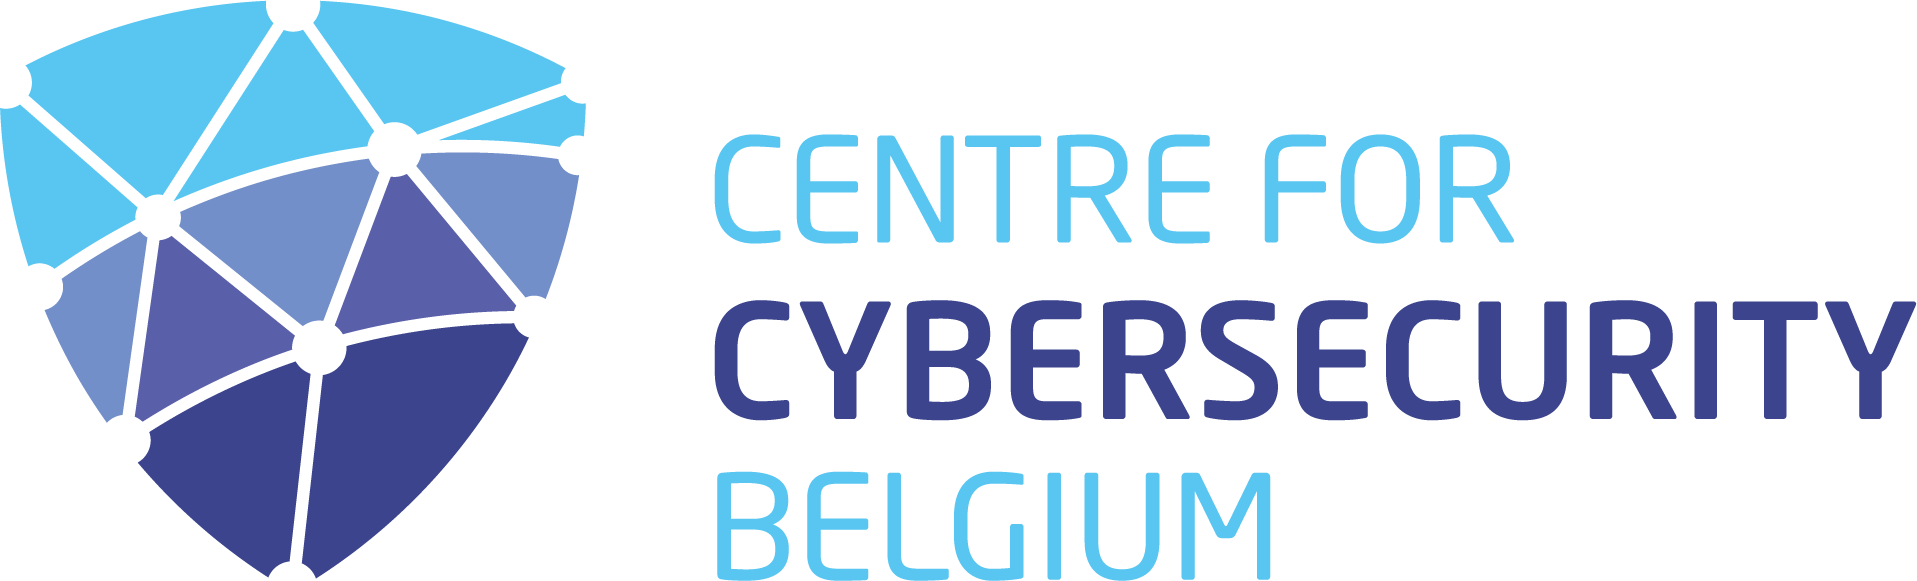 Centre for Cybersecurity Belgium logo